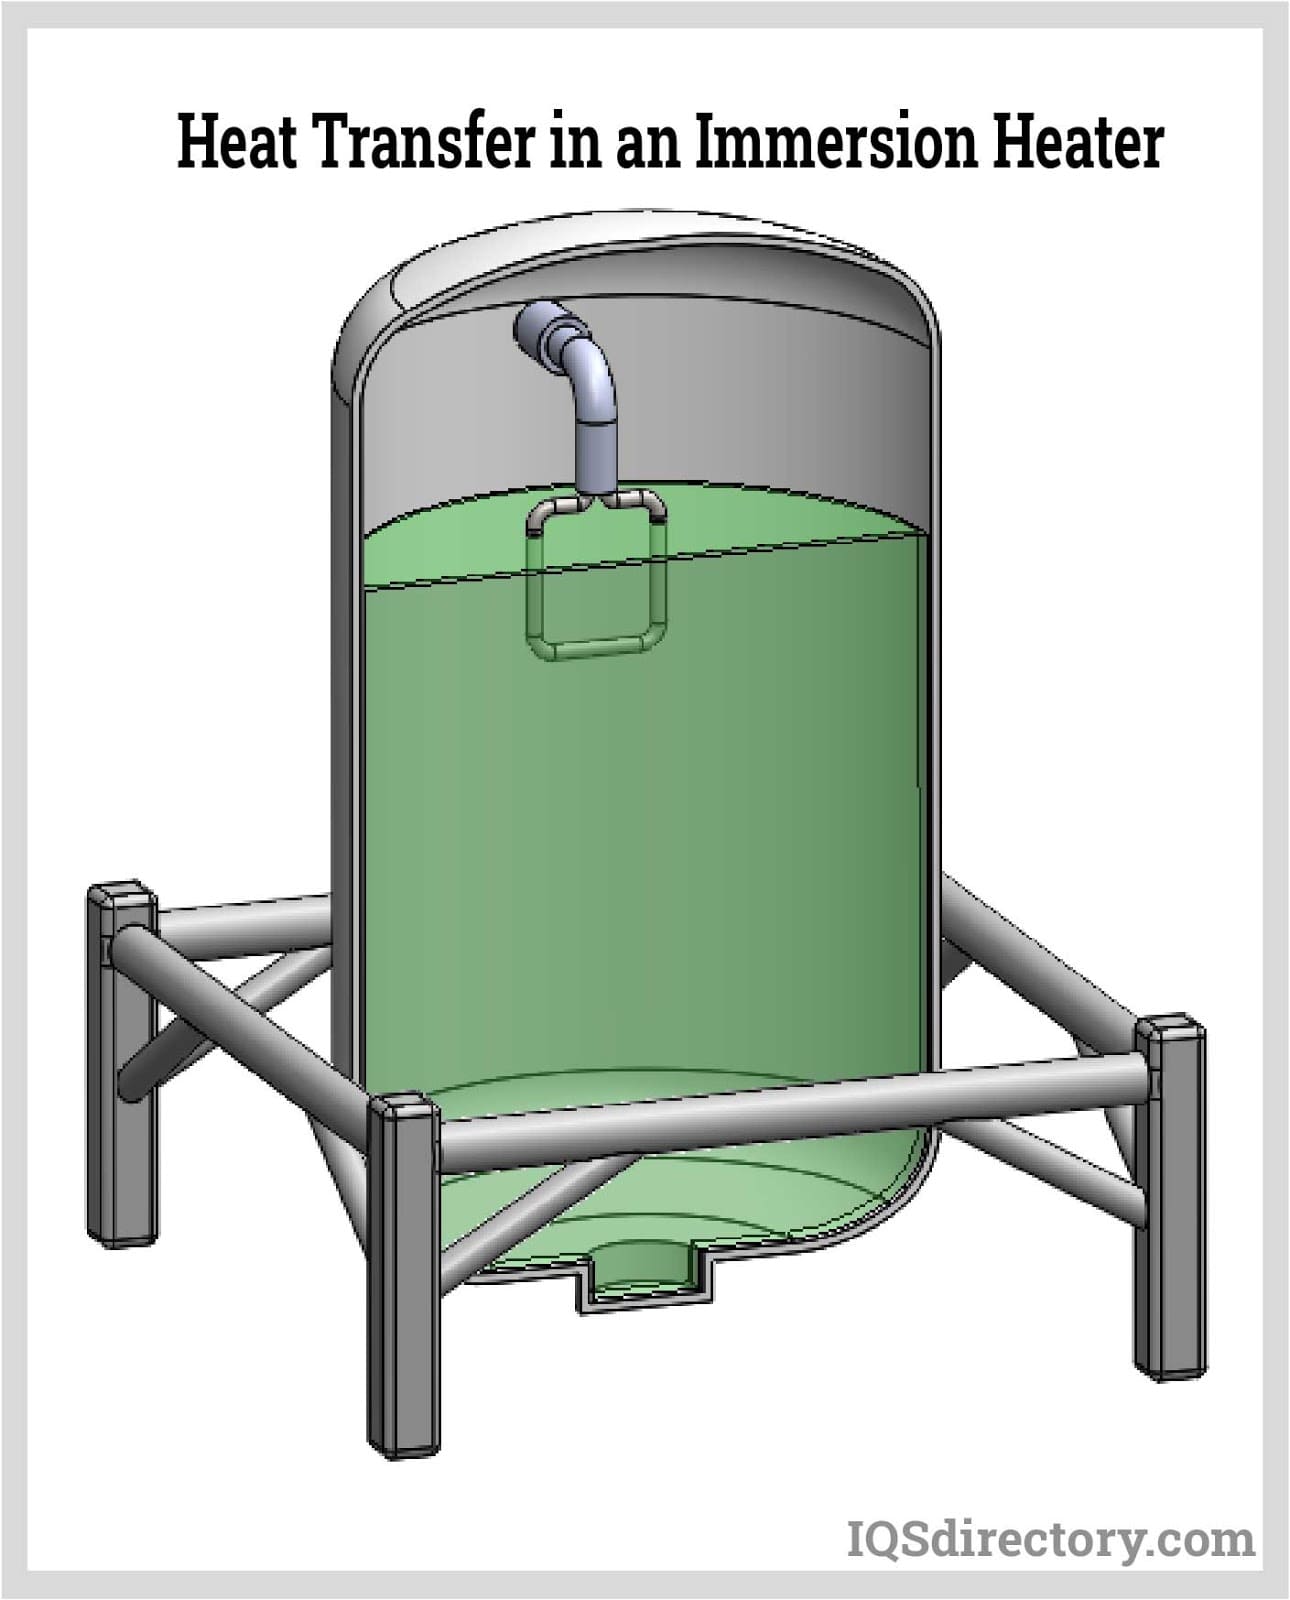 Heat Transfer in an Immersion Heater